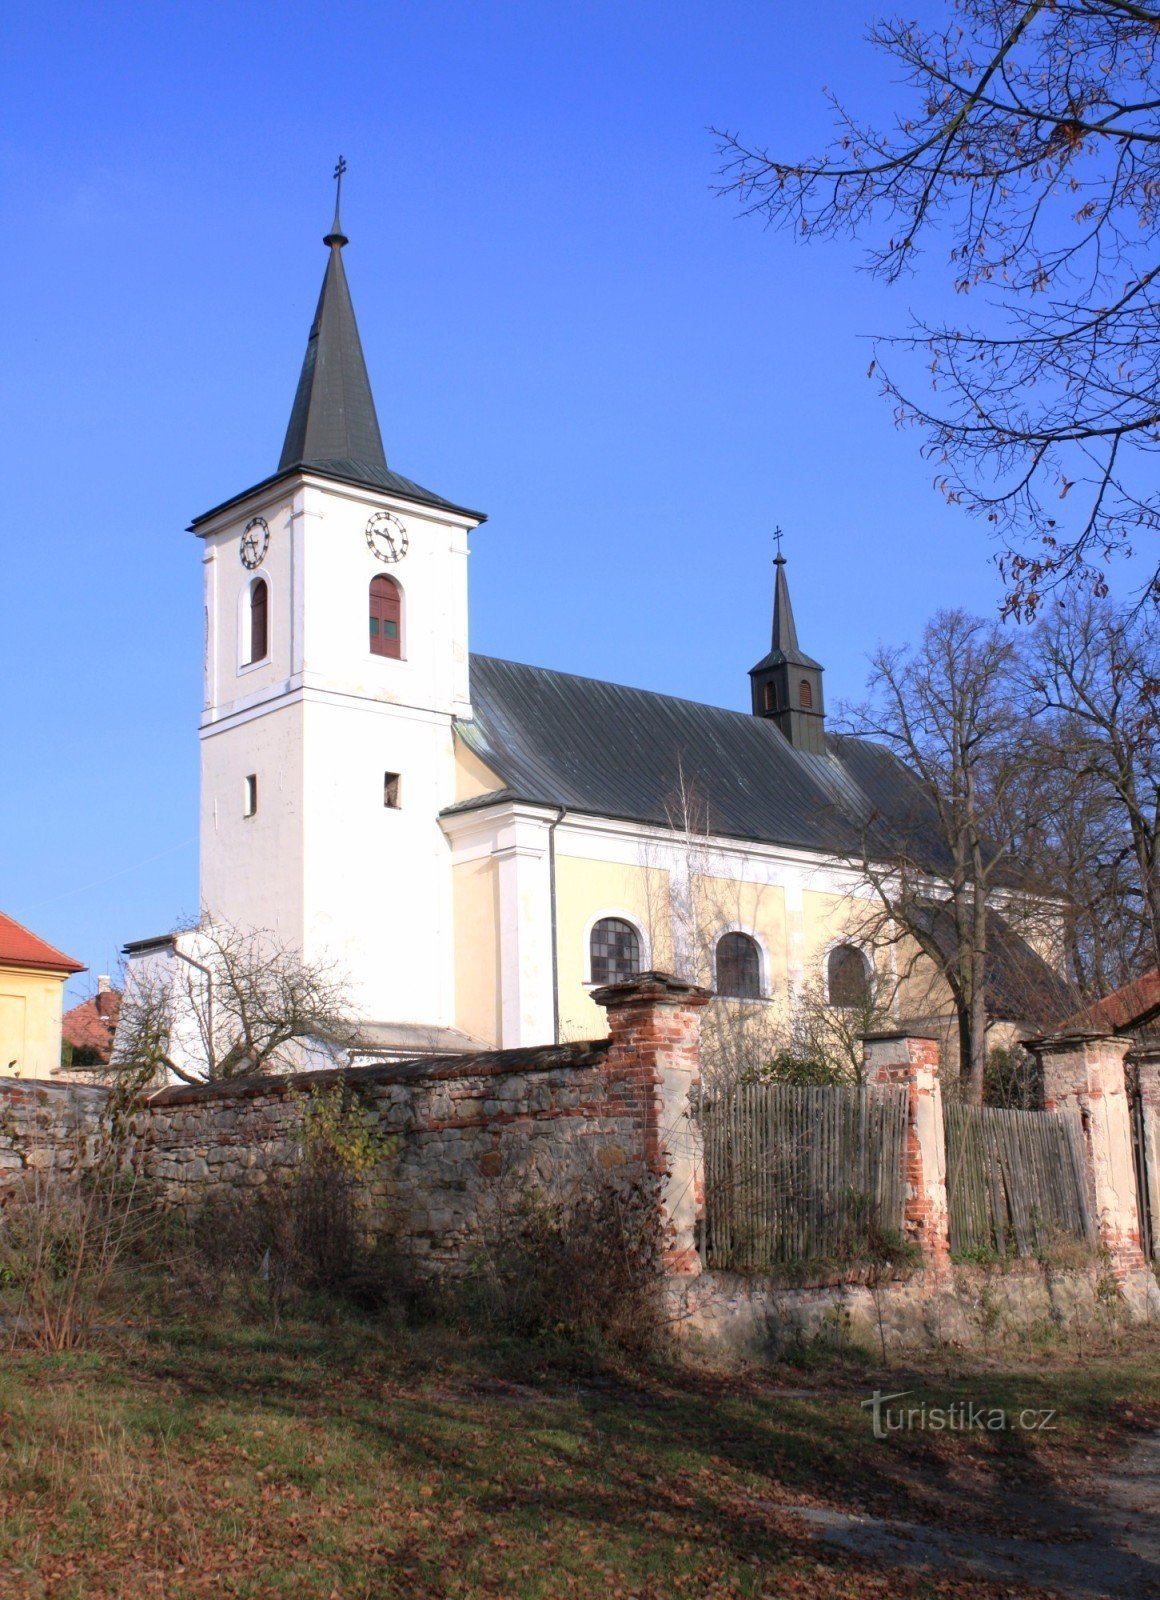 Doubravice nad Svitavou - biserica Sf. Ioan Botezatorul